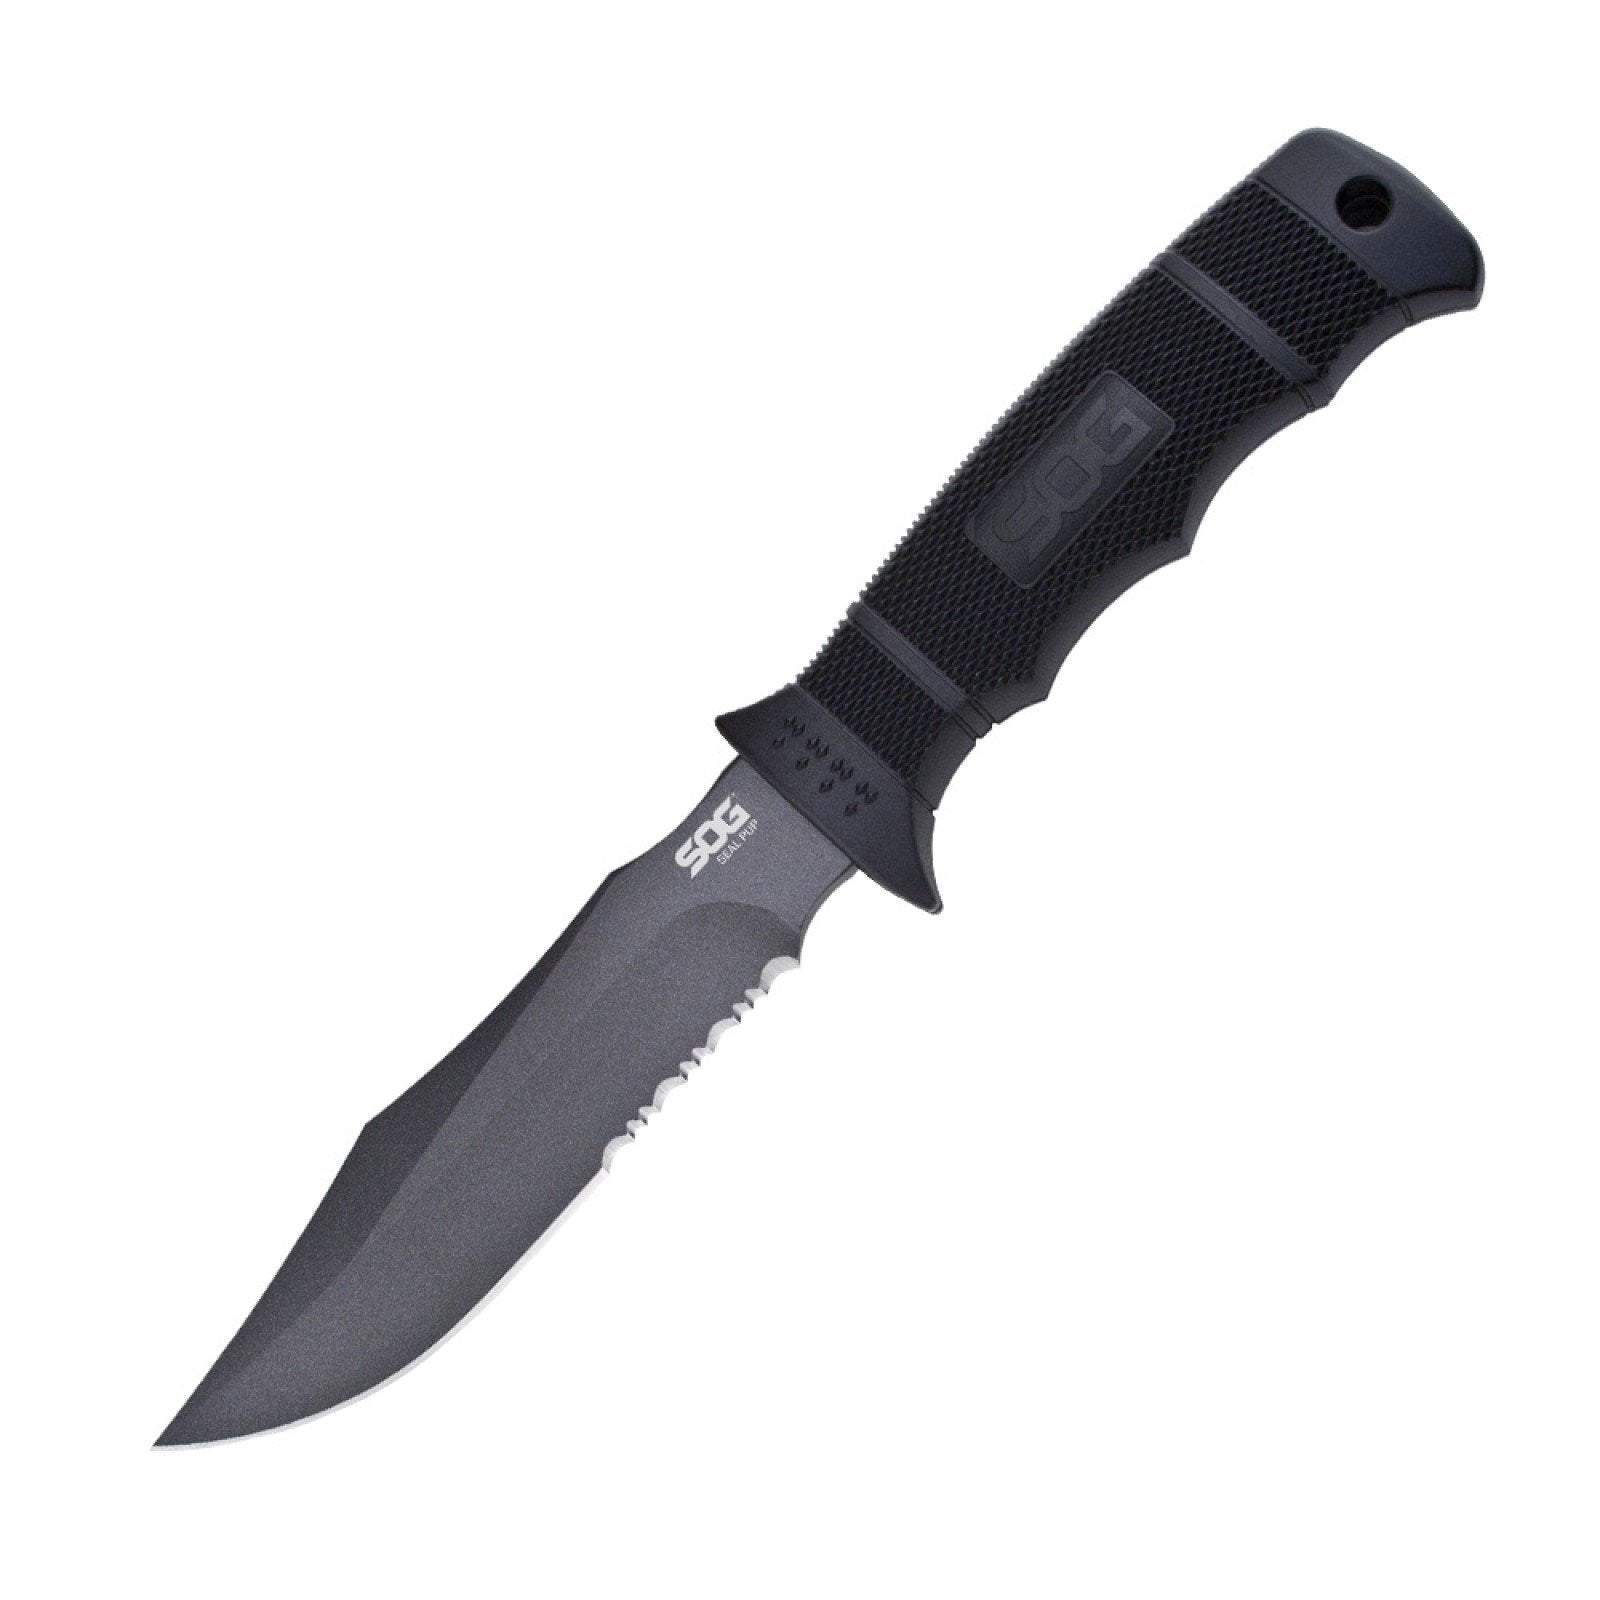 SOG Knives Seal Pup Knife with Hard Nylon Sheath Knives SOG Knives Tactical Gear Supplier Tactical Distributors Australia